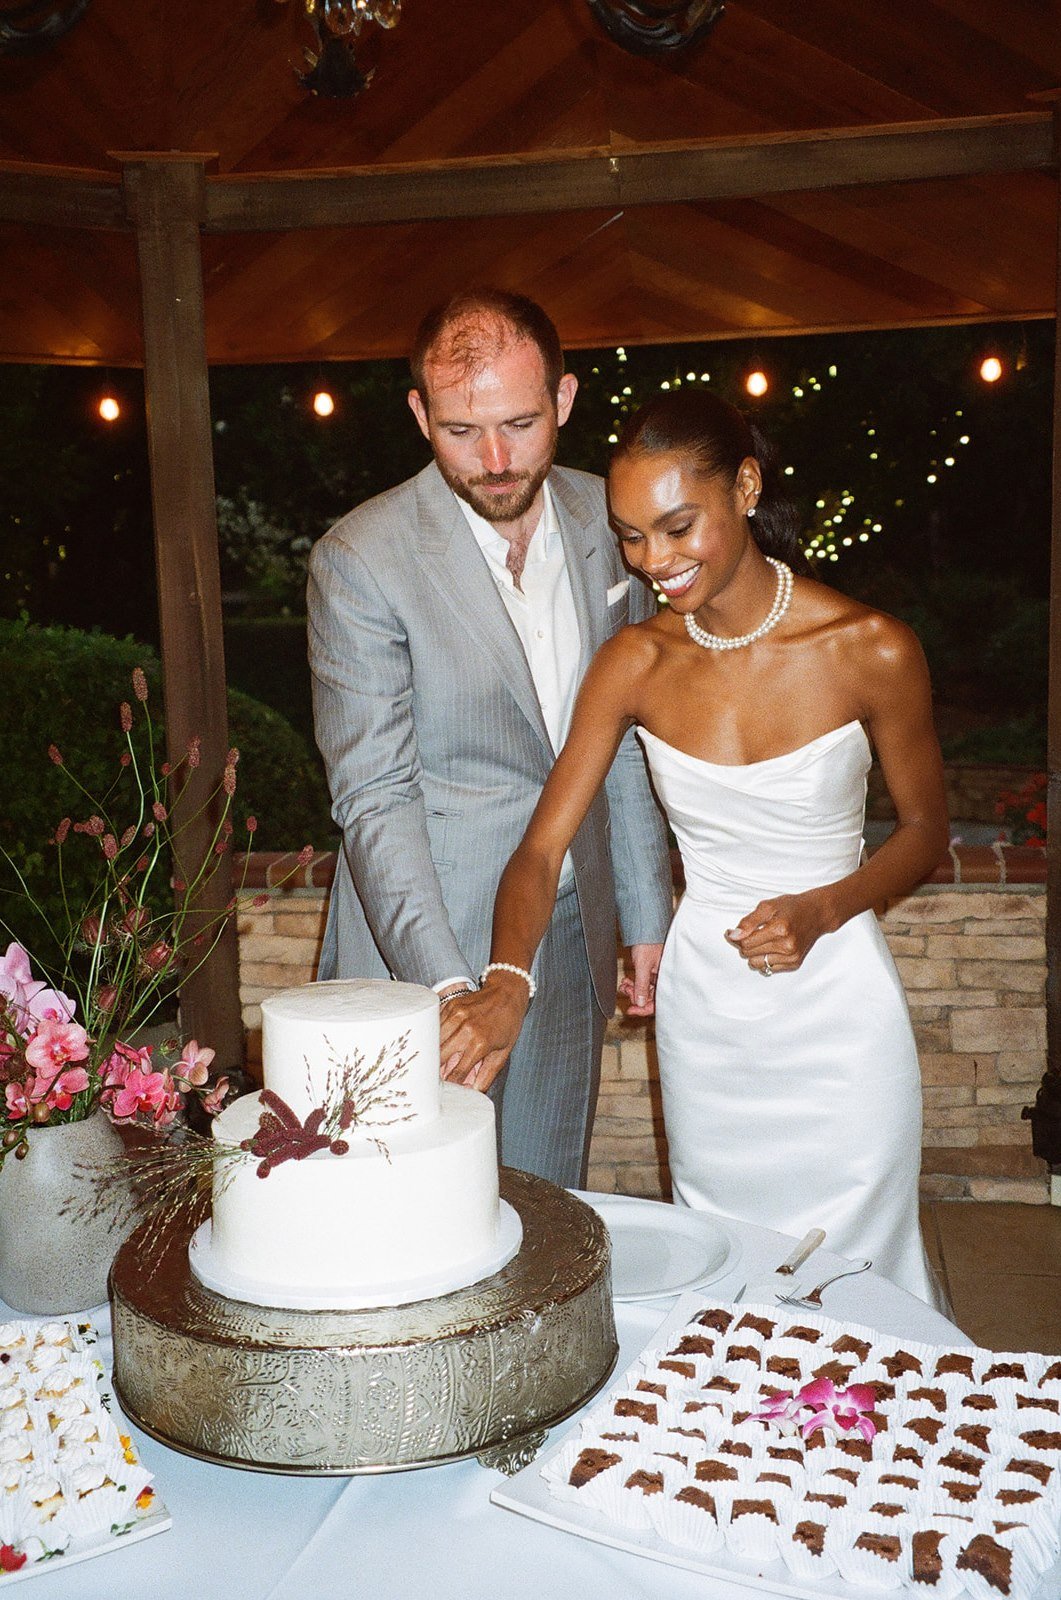 Film photo of bride and groom cutting wedding cake